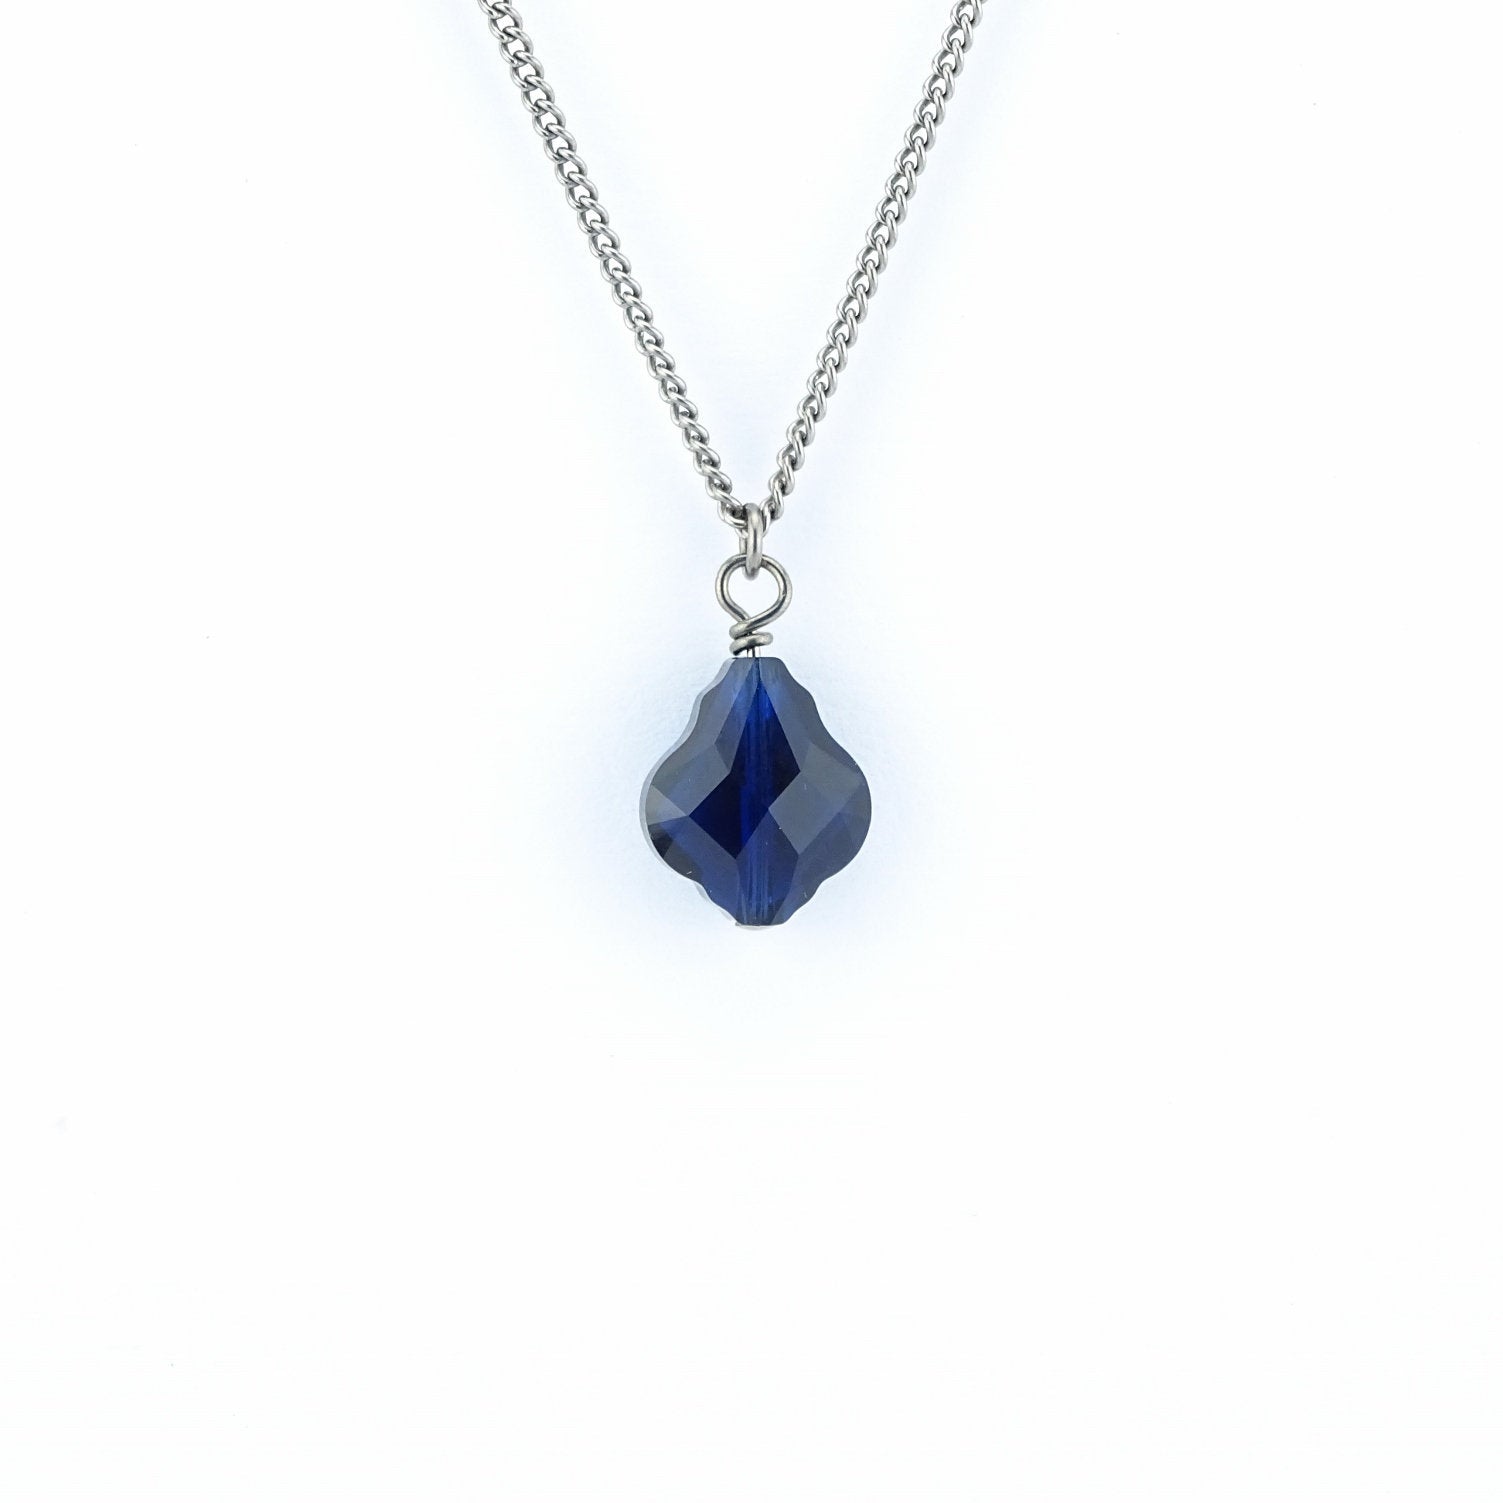 Dark Blue Baroque Crystal Titanium Necklace, Nickel Free Necklace For Sensitive Skin, Dark Indigo Swarovski Crystal, Pure Titanium Jewelry